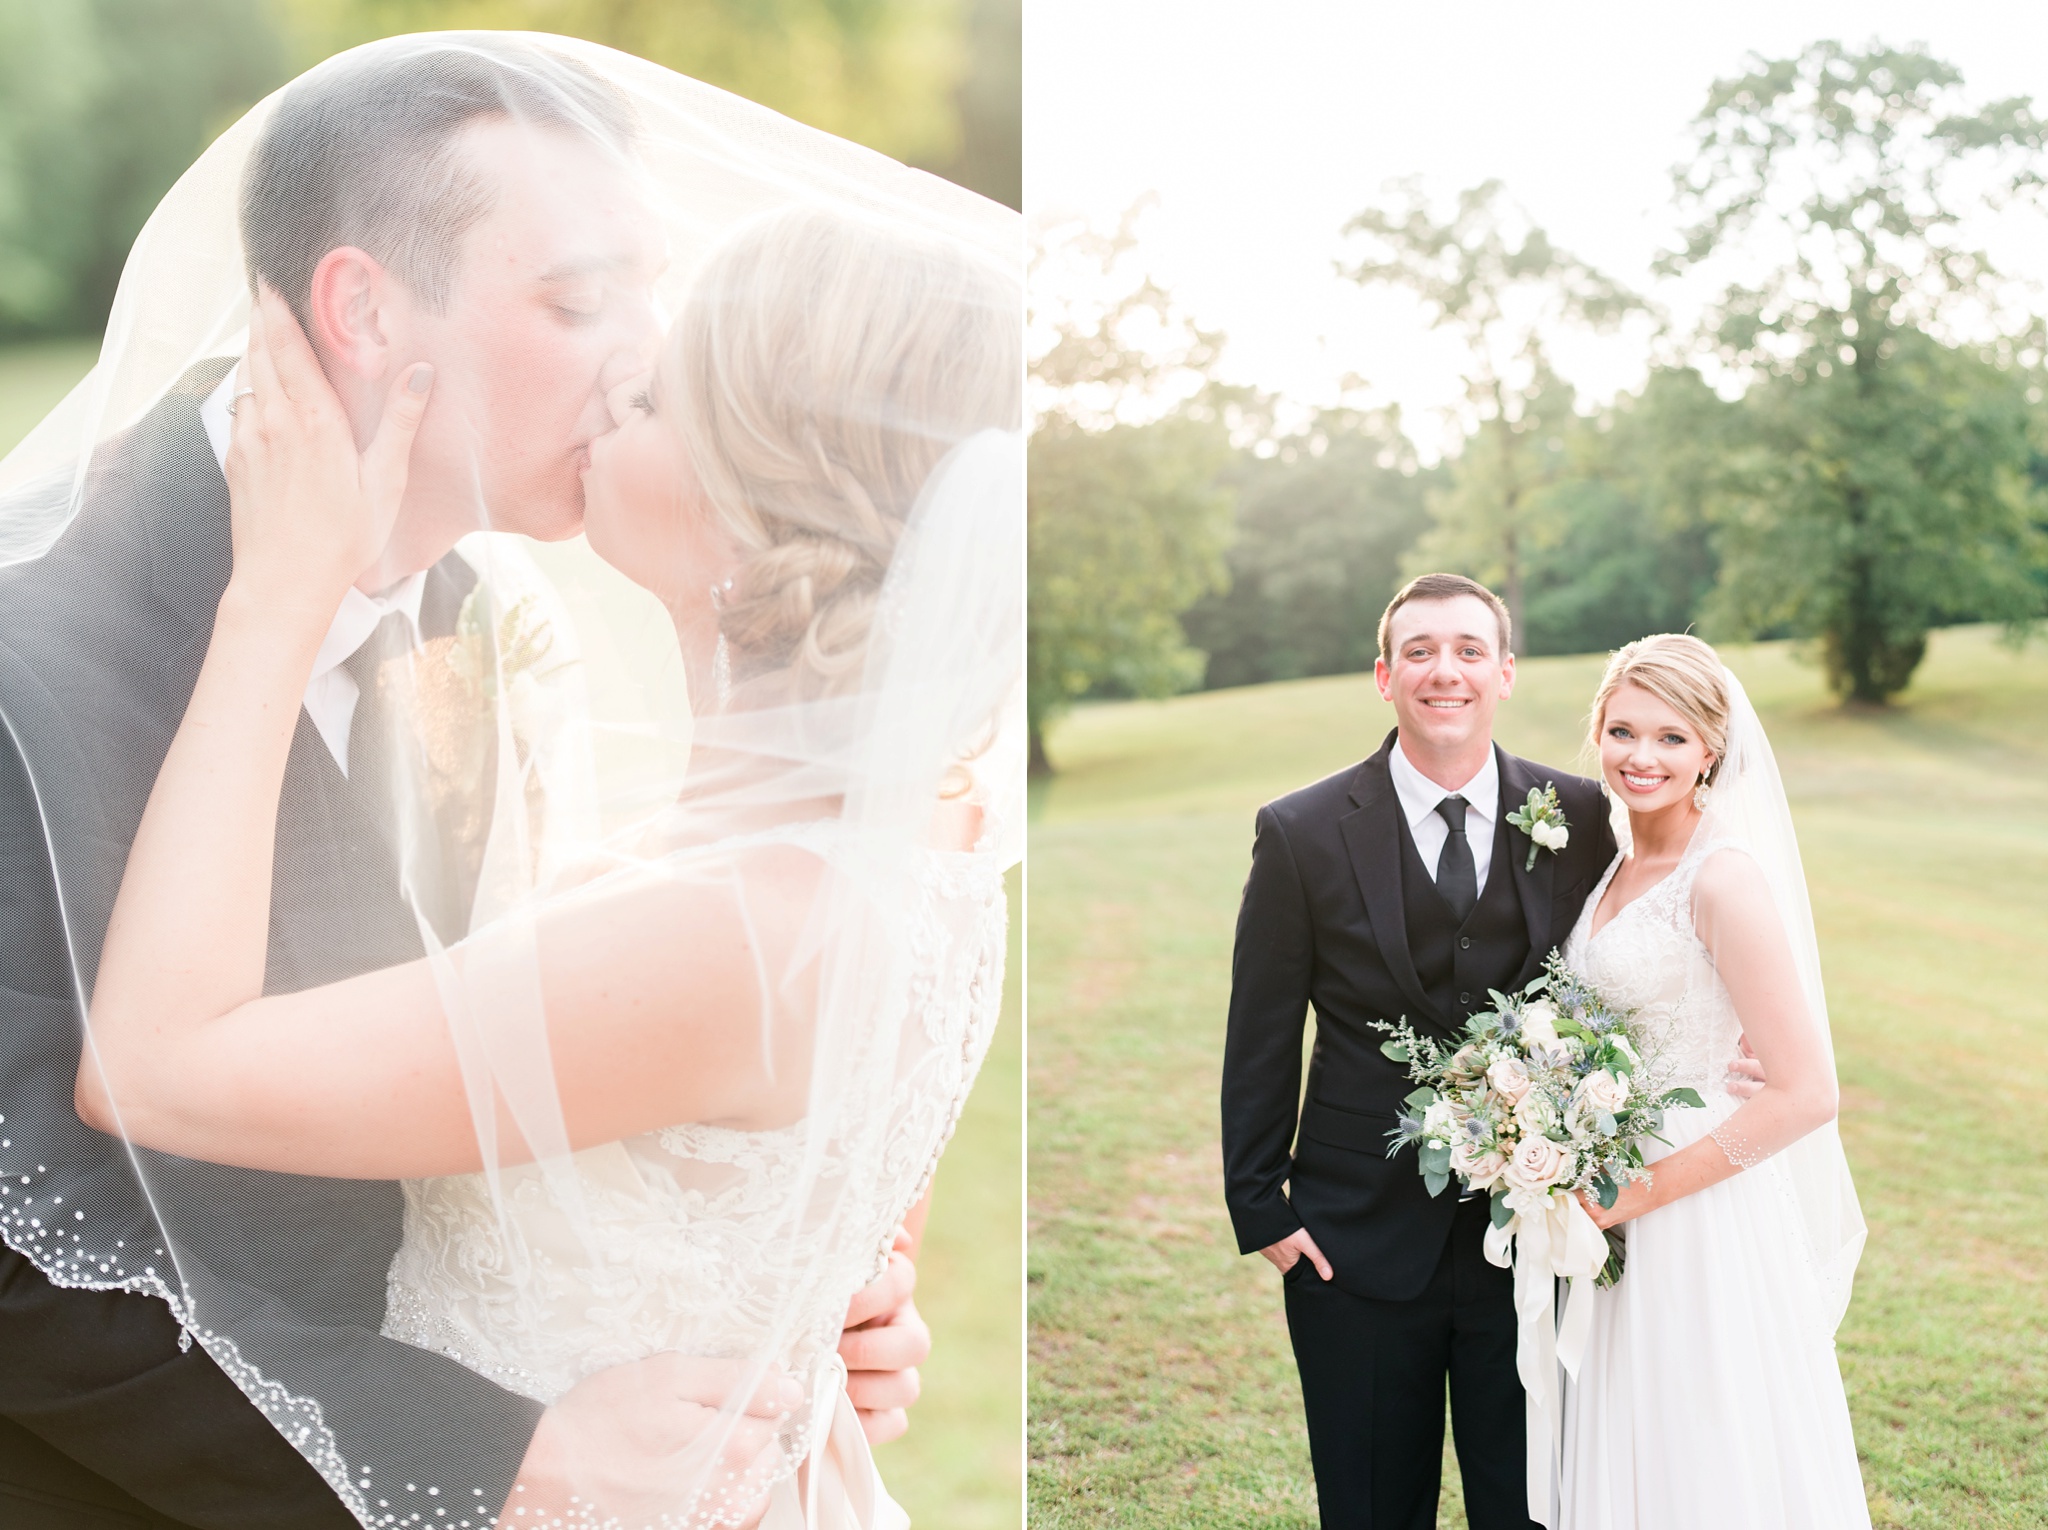 Gray and Black Classic Outdoor Wedding | Birmingham Alabama Wedding Photographers_0045.jpg